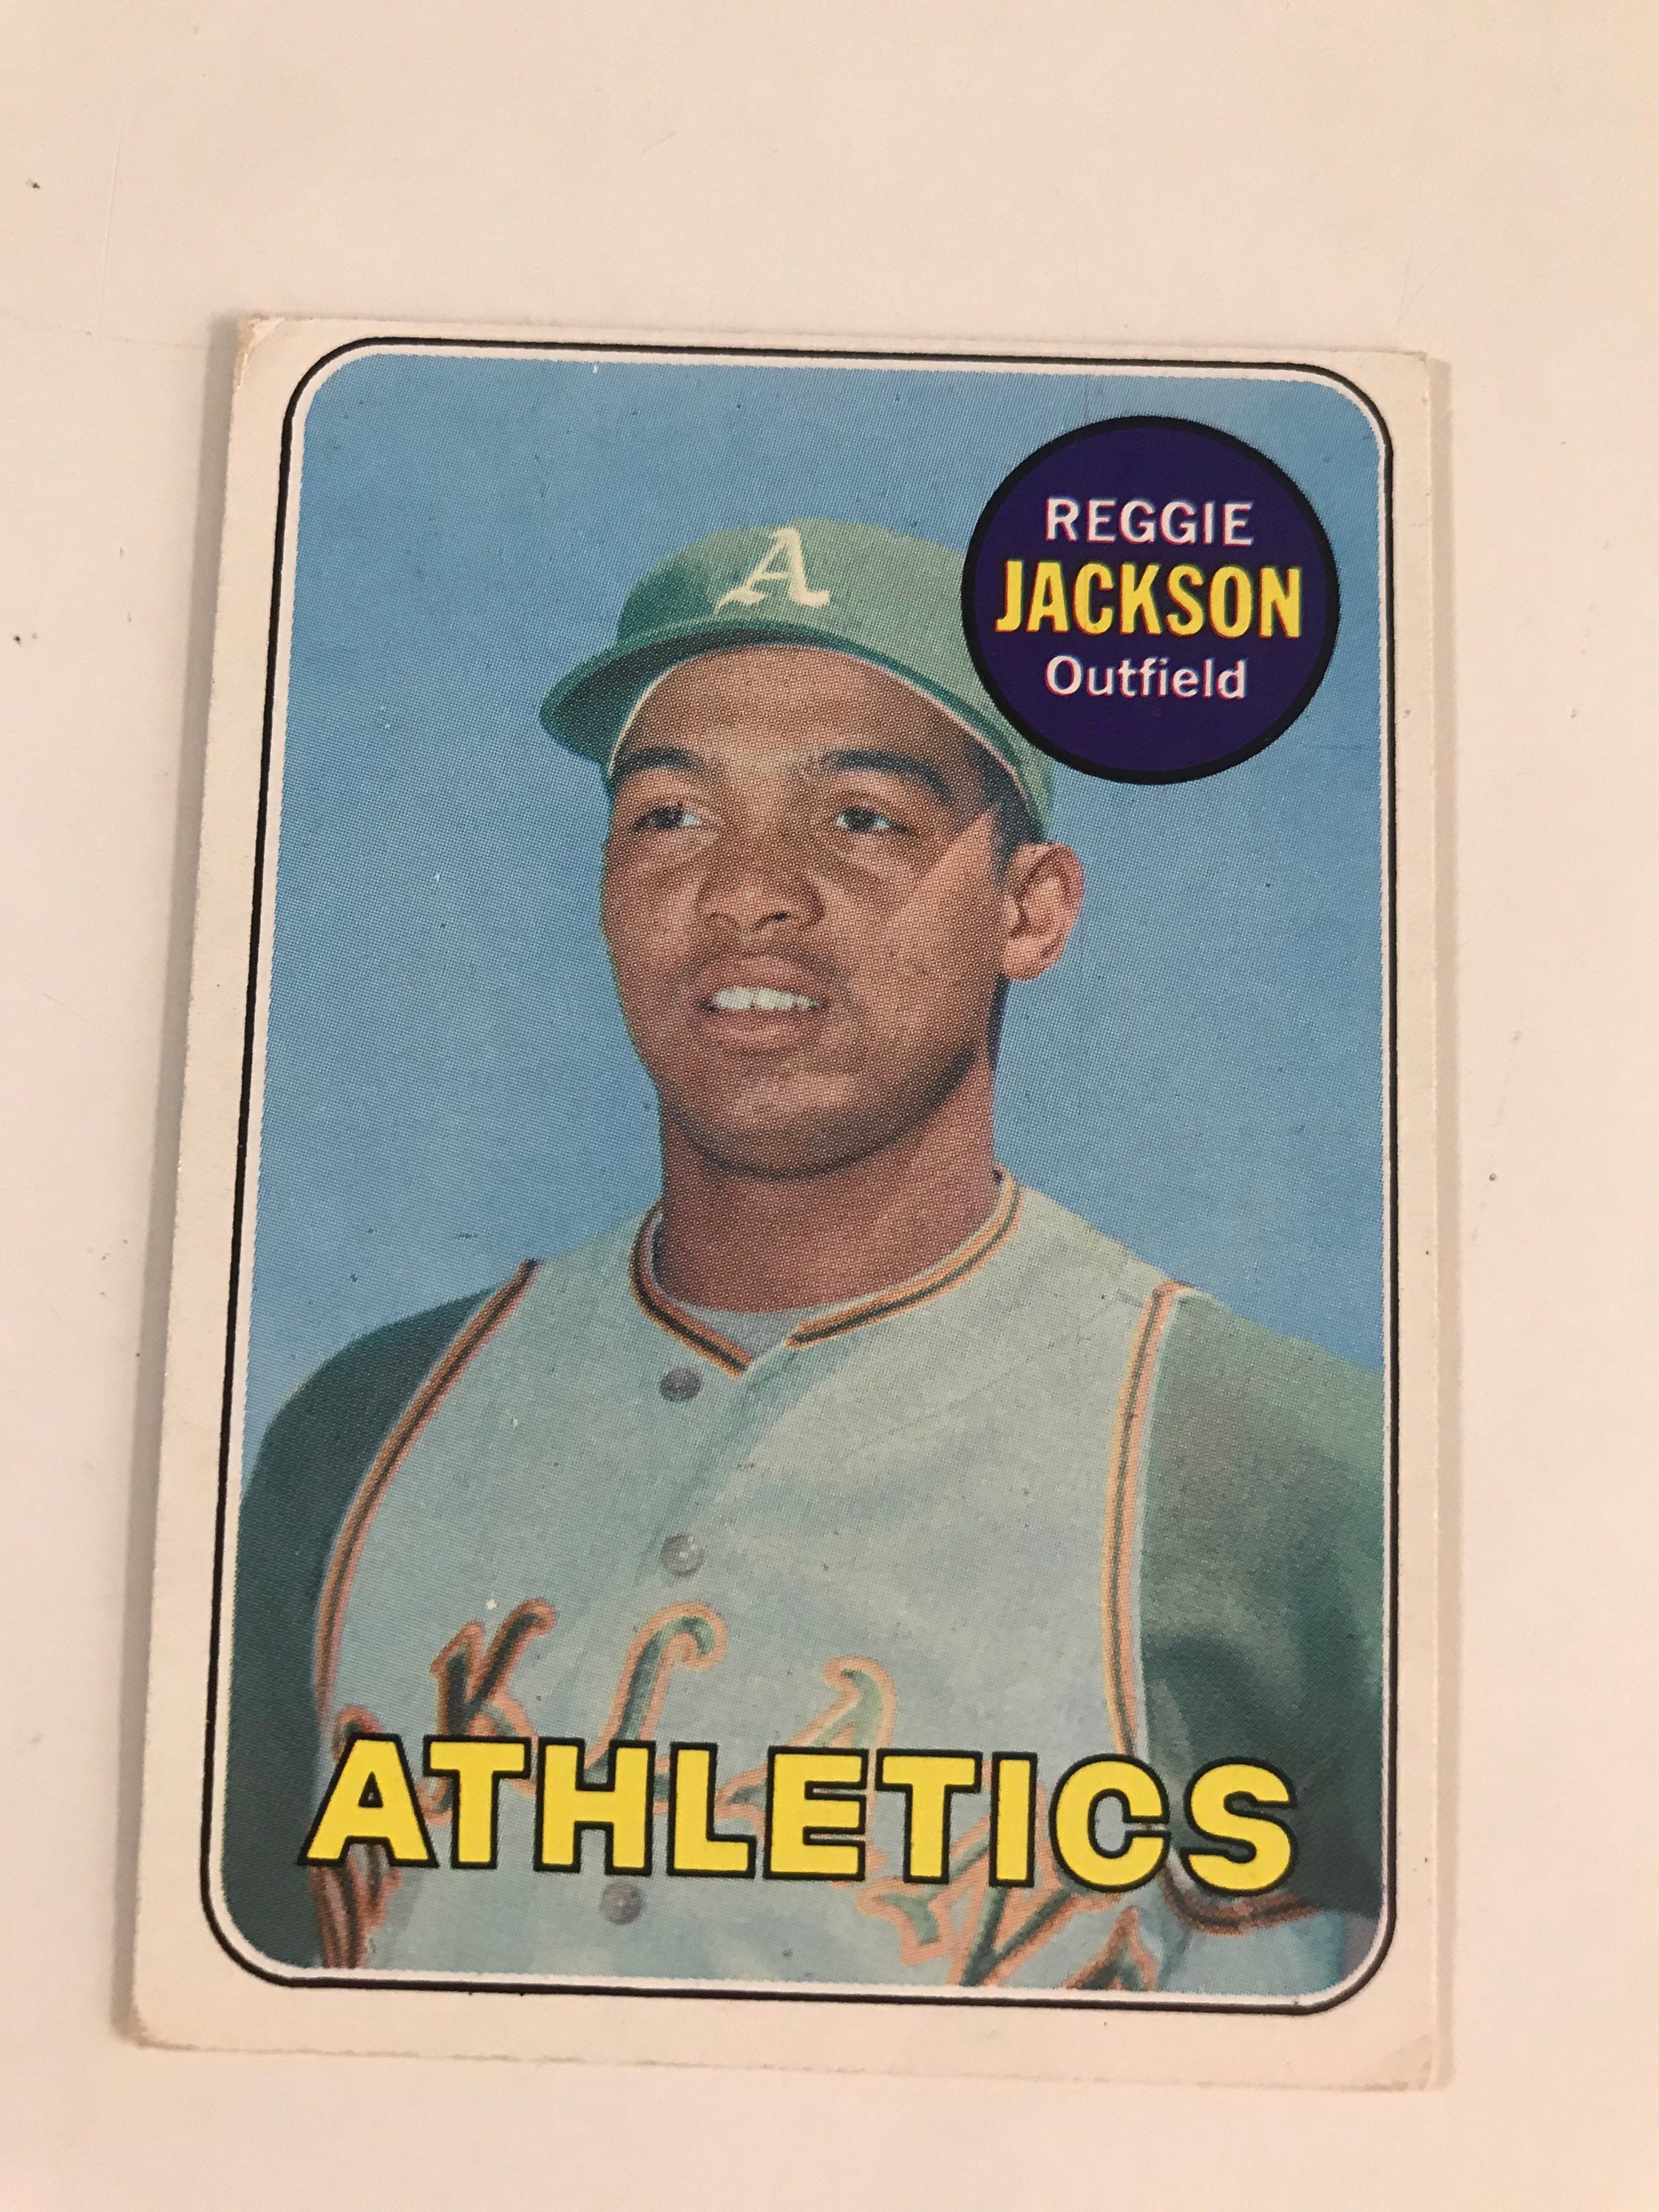 1969 Topps Baseball REGGIE JACKSON Rookie Card 260 ATHLETICS. 